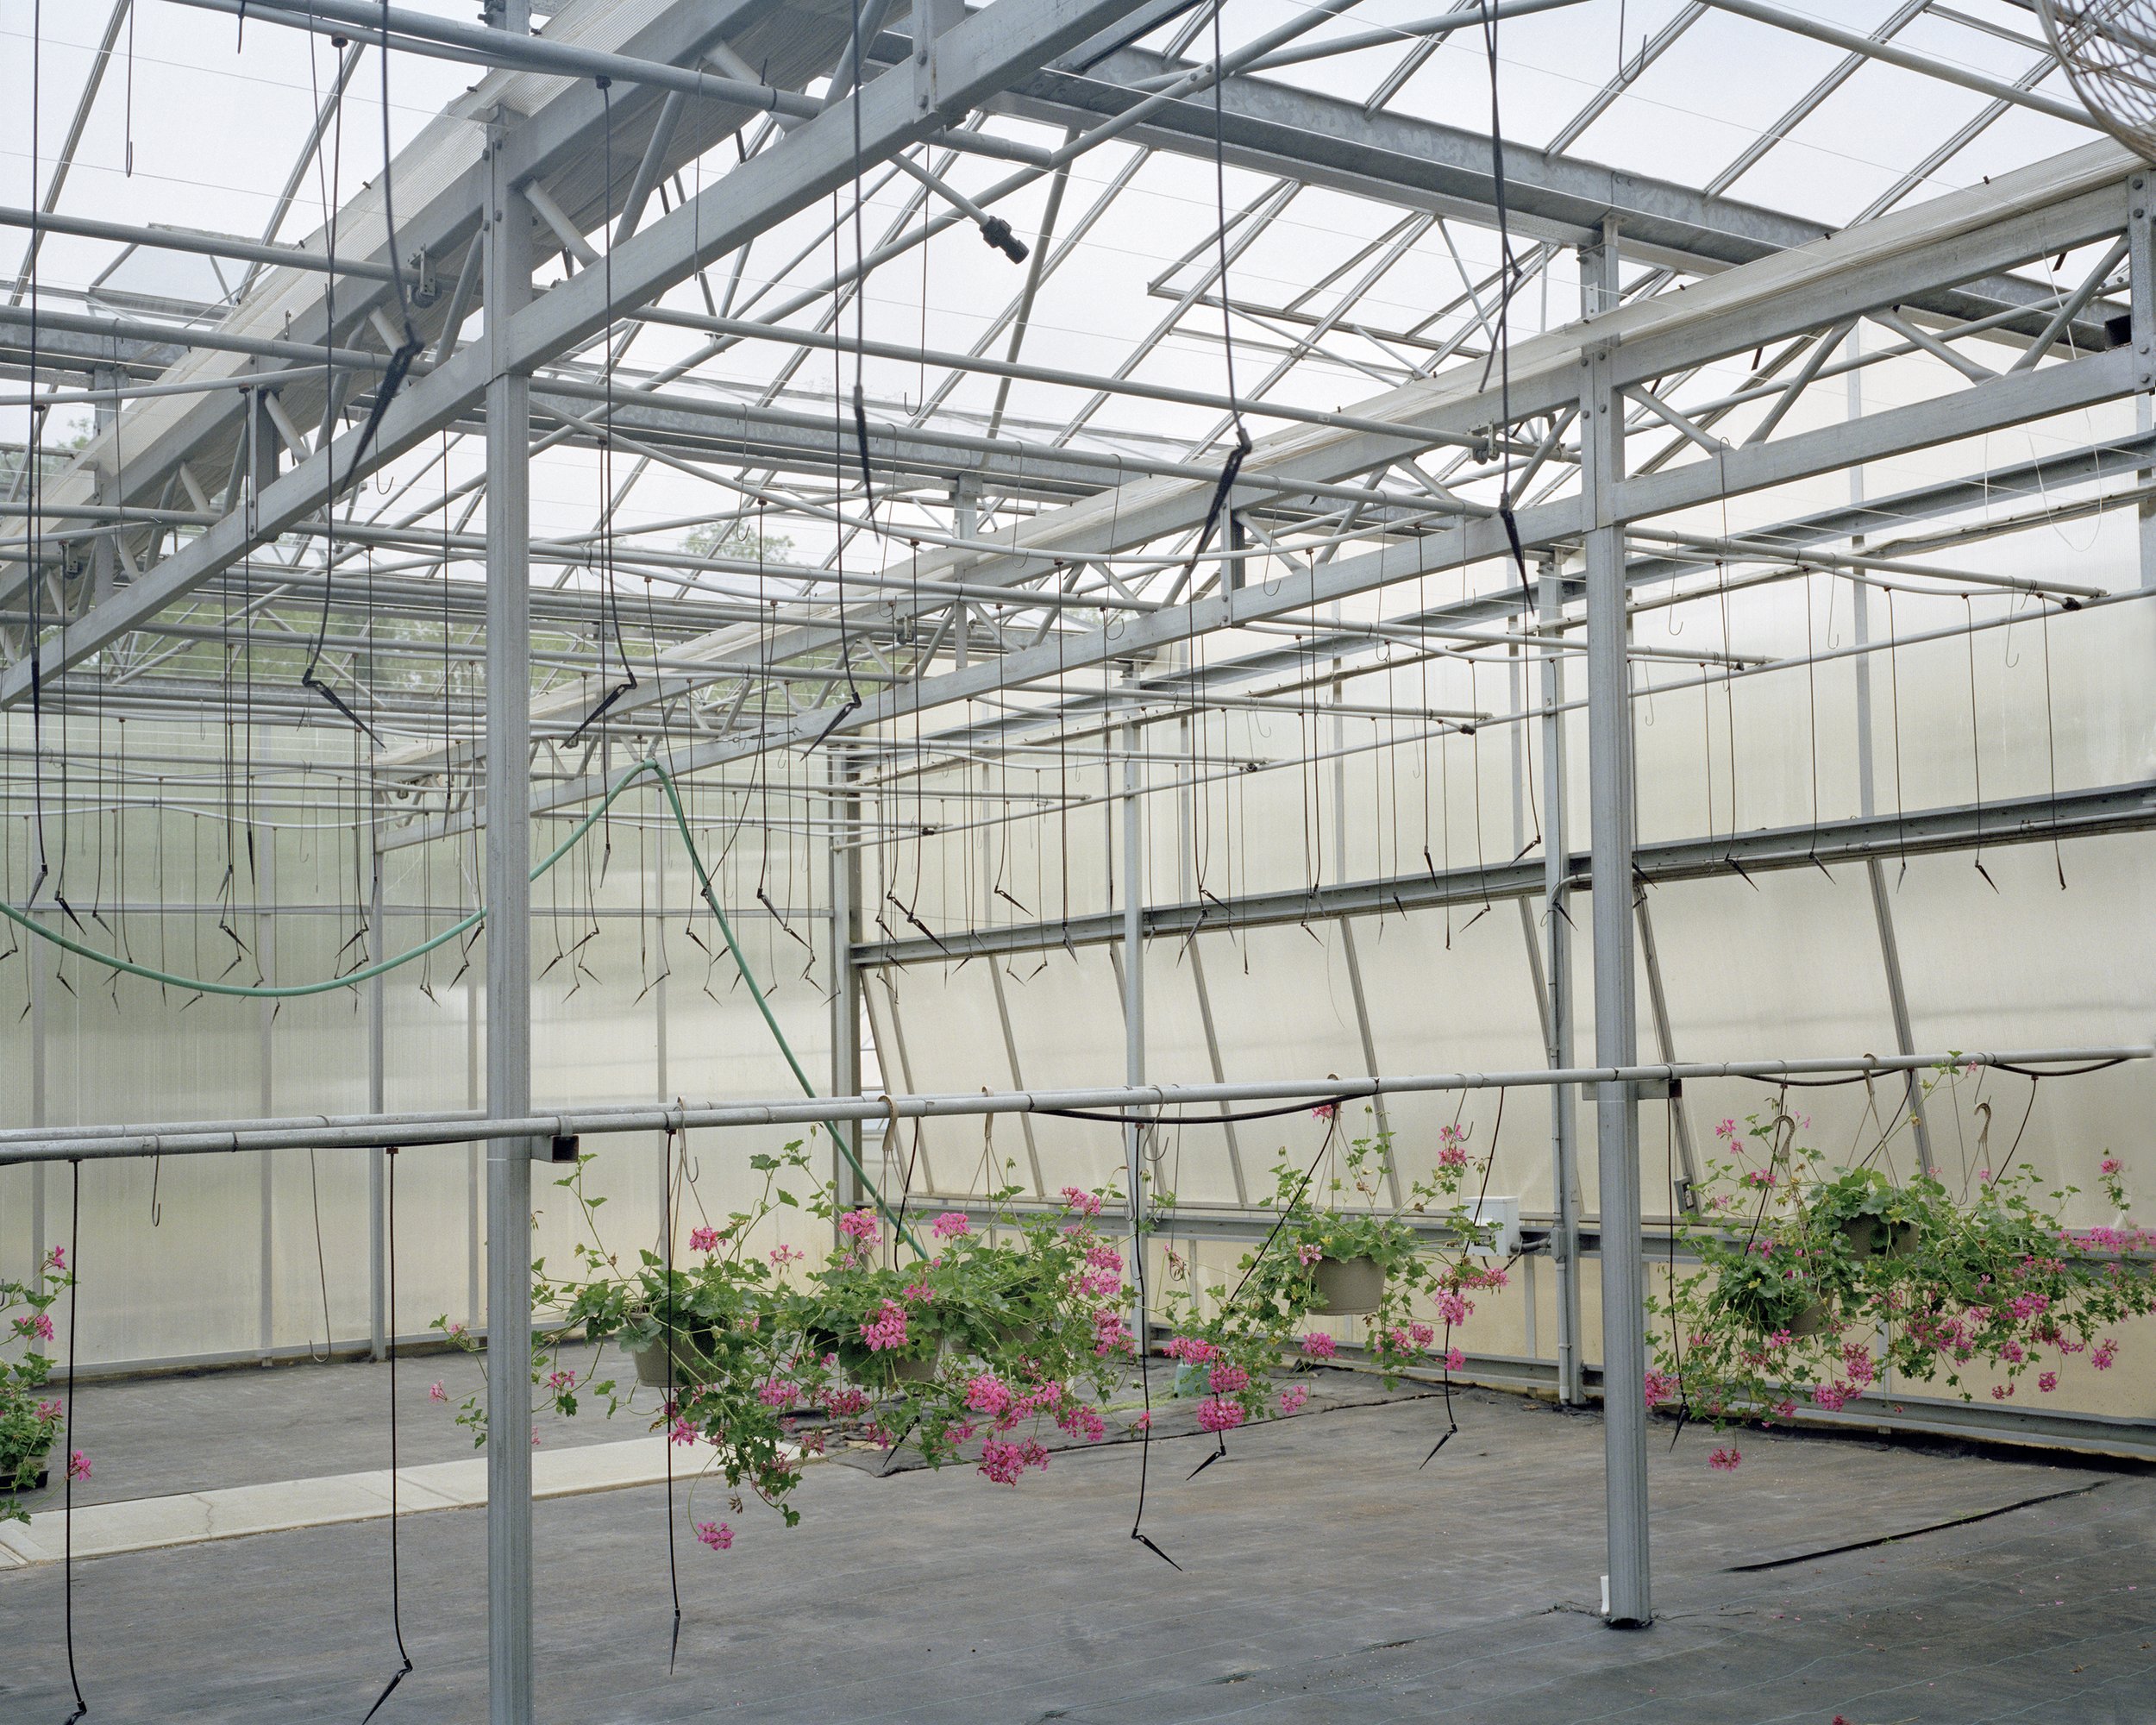 29 Aqueboque Greenhouse-Geraniums.jpg